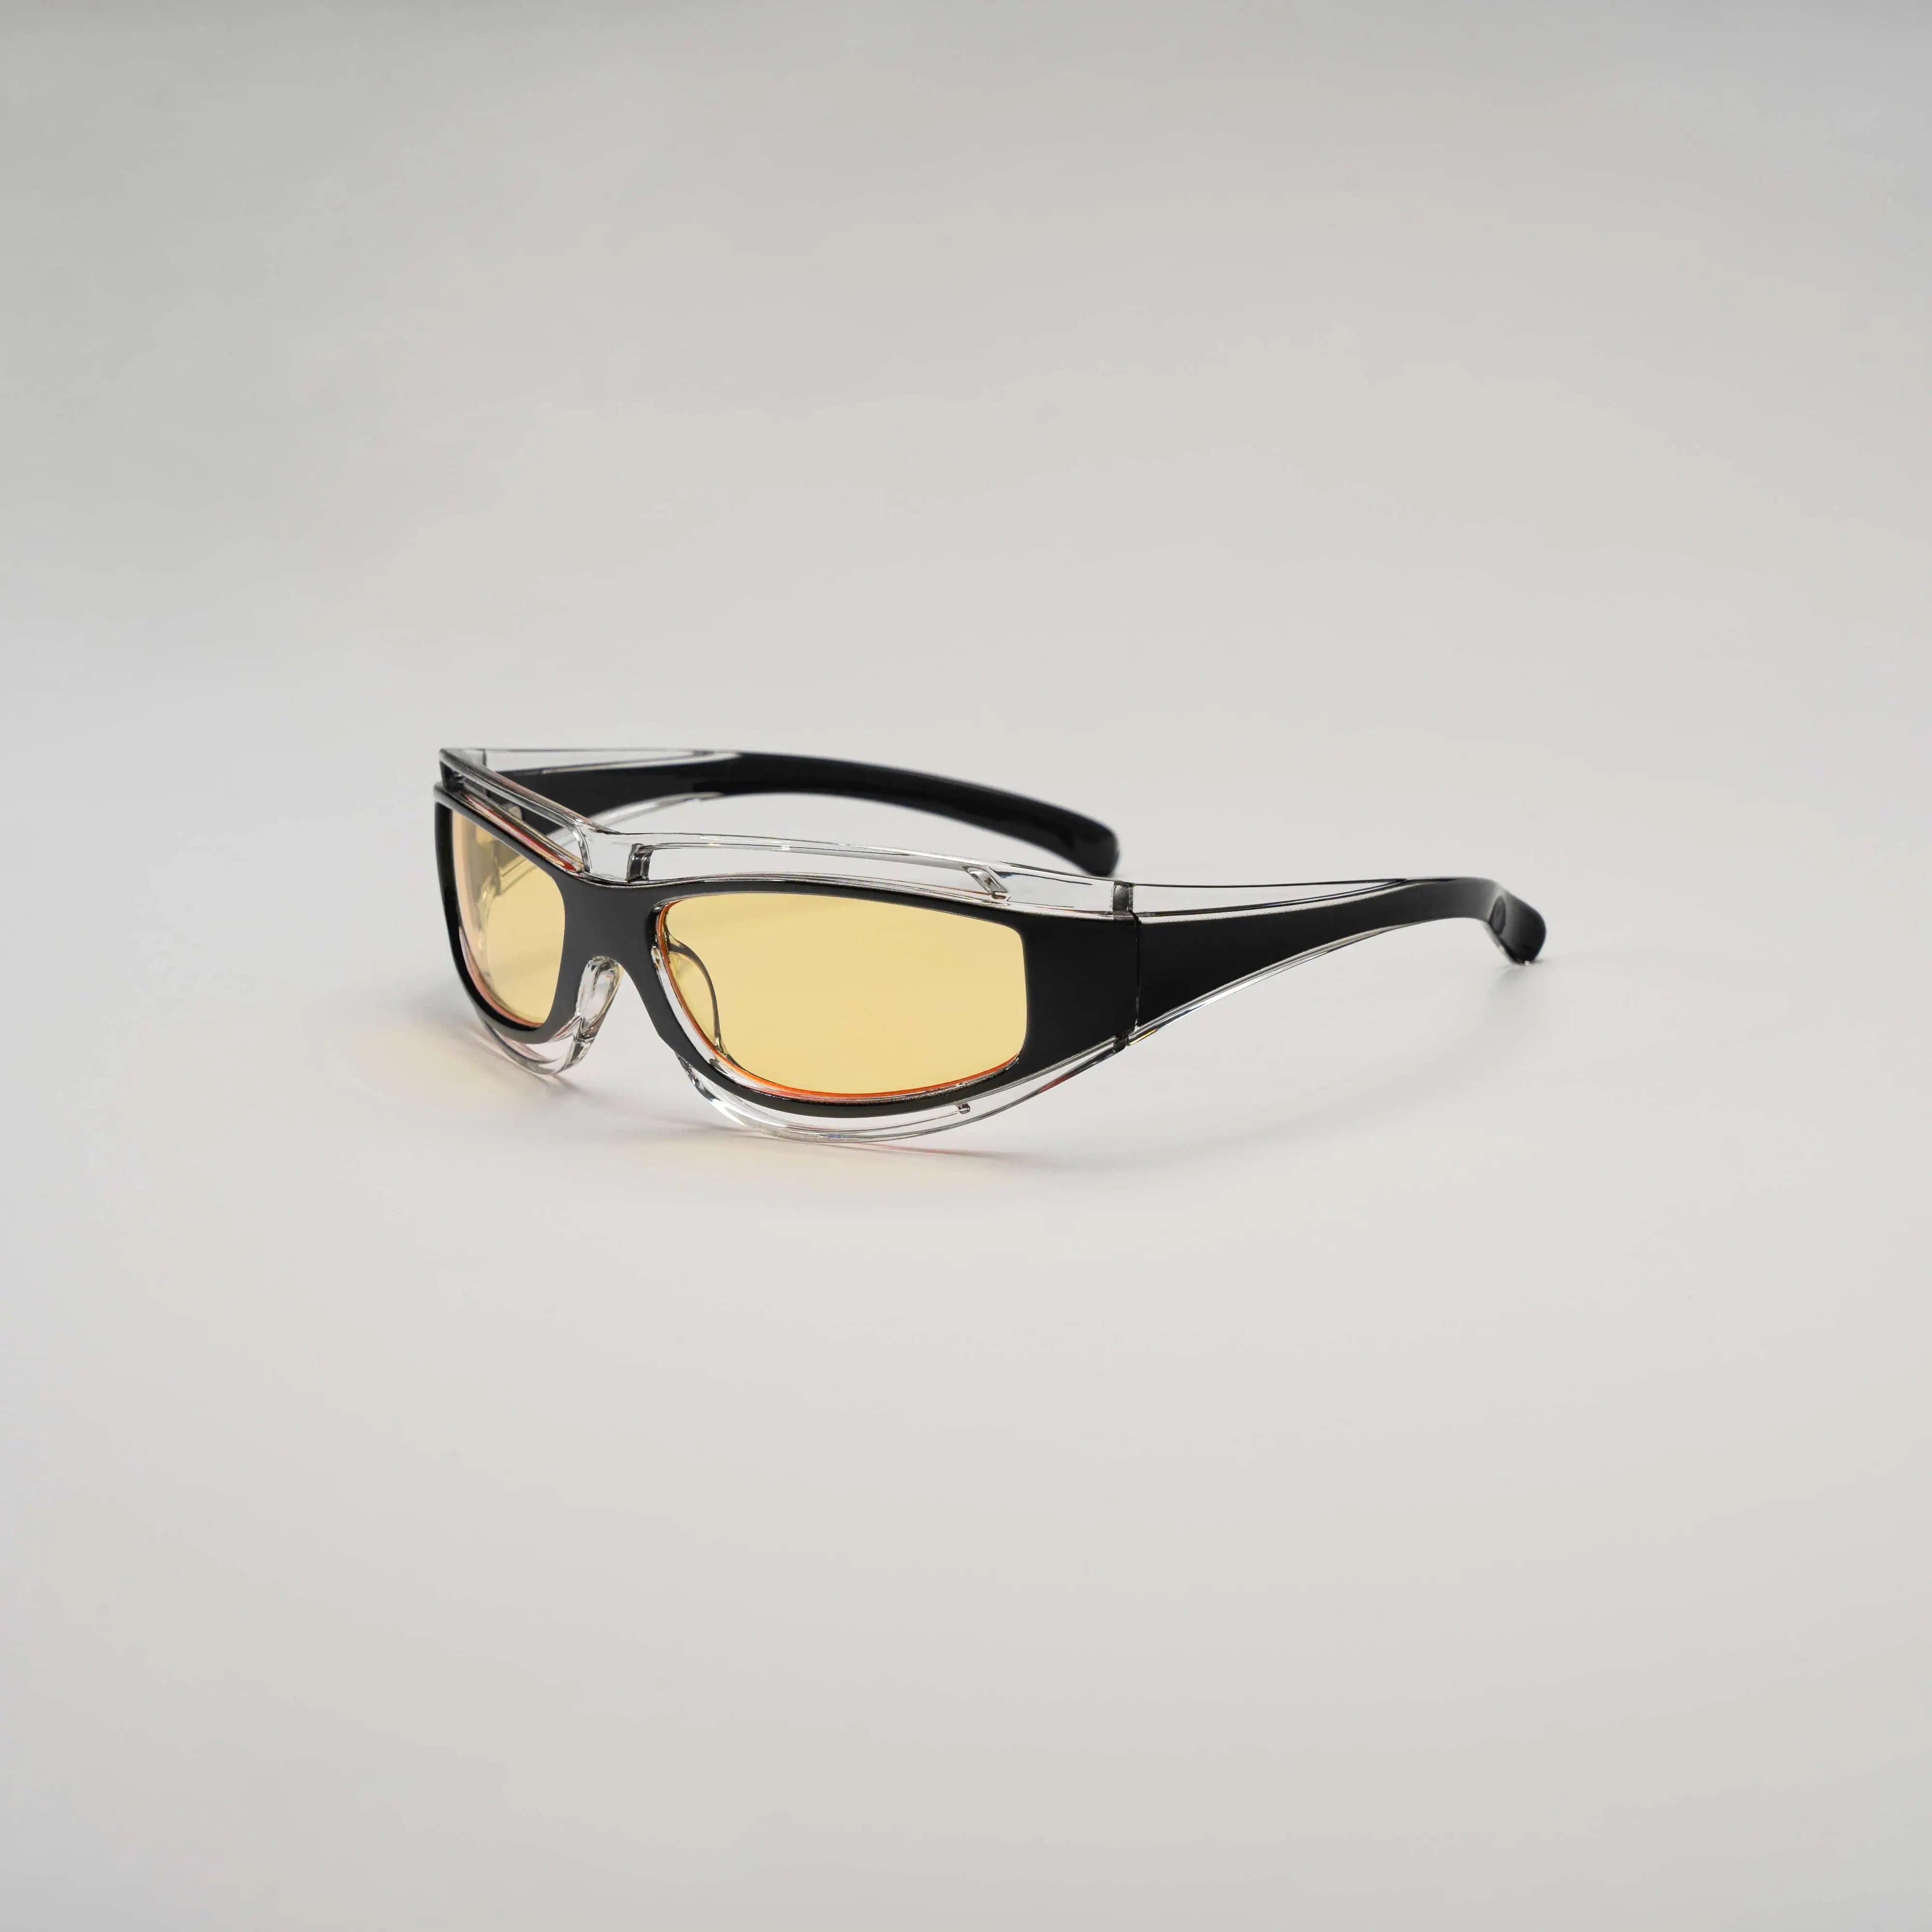 'Throttle' Y2K Wraparound Sunglasses in Yellow & Black